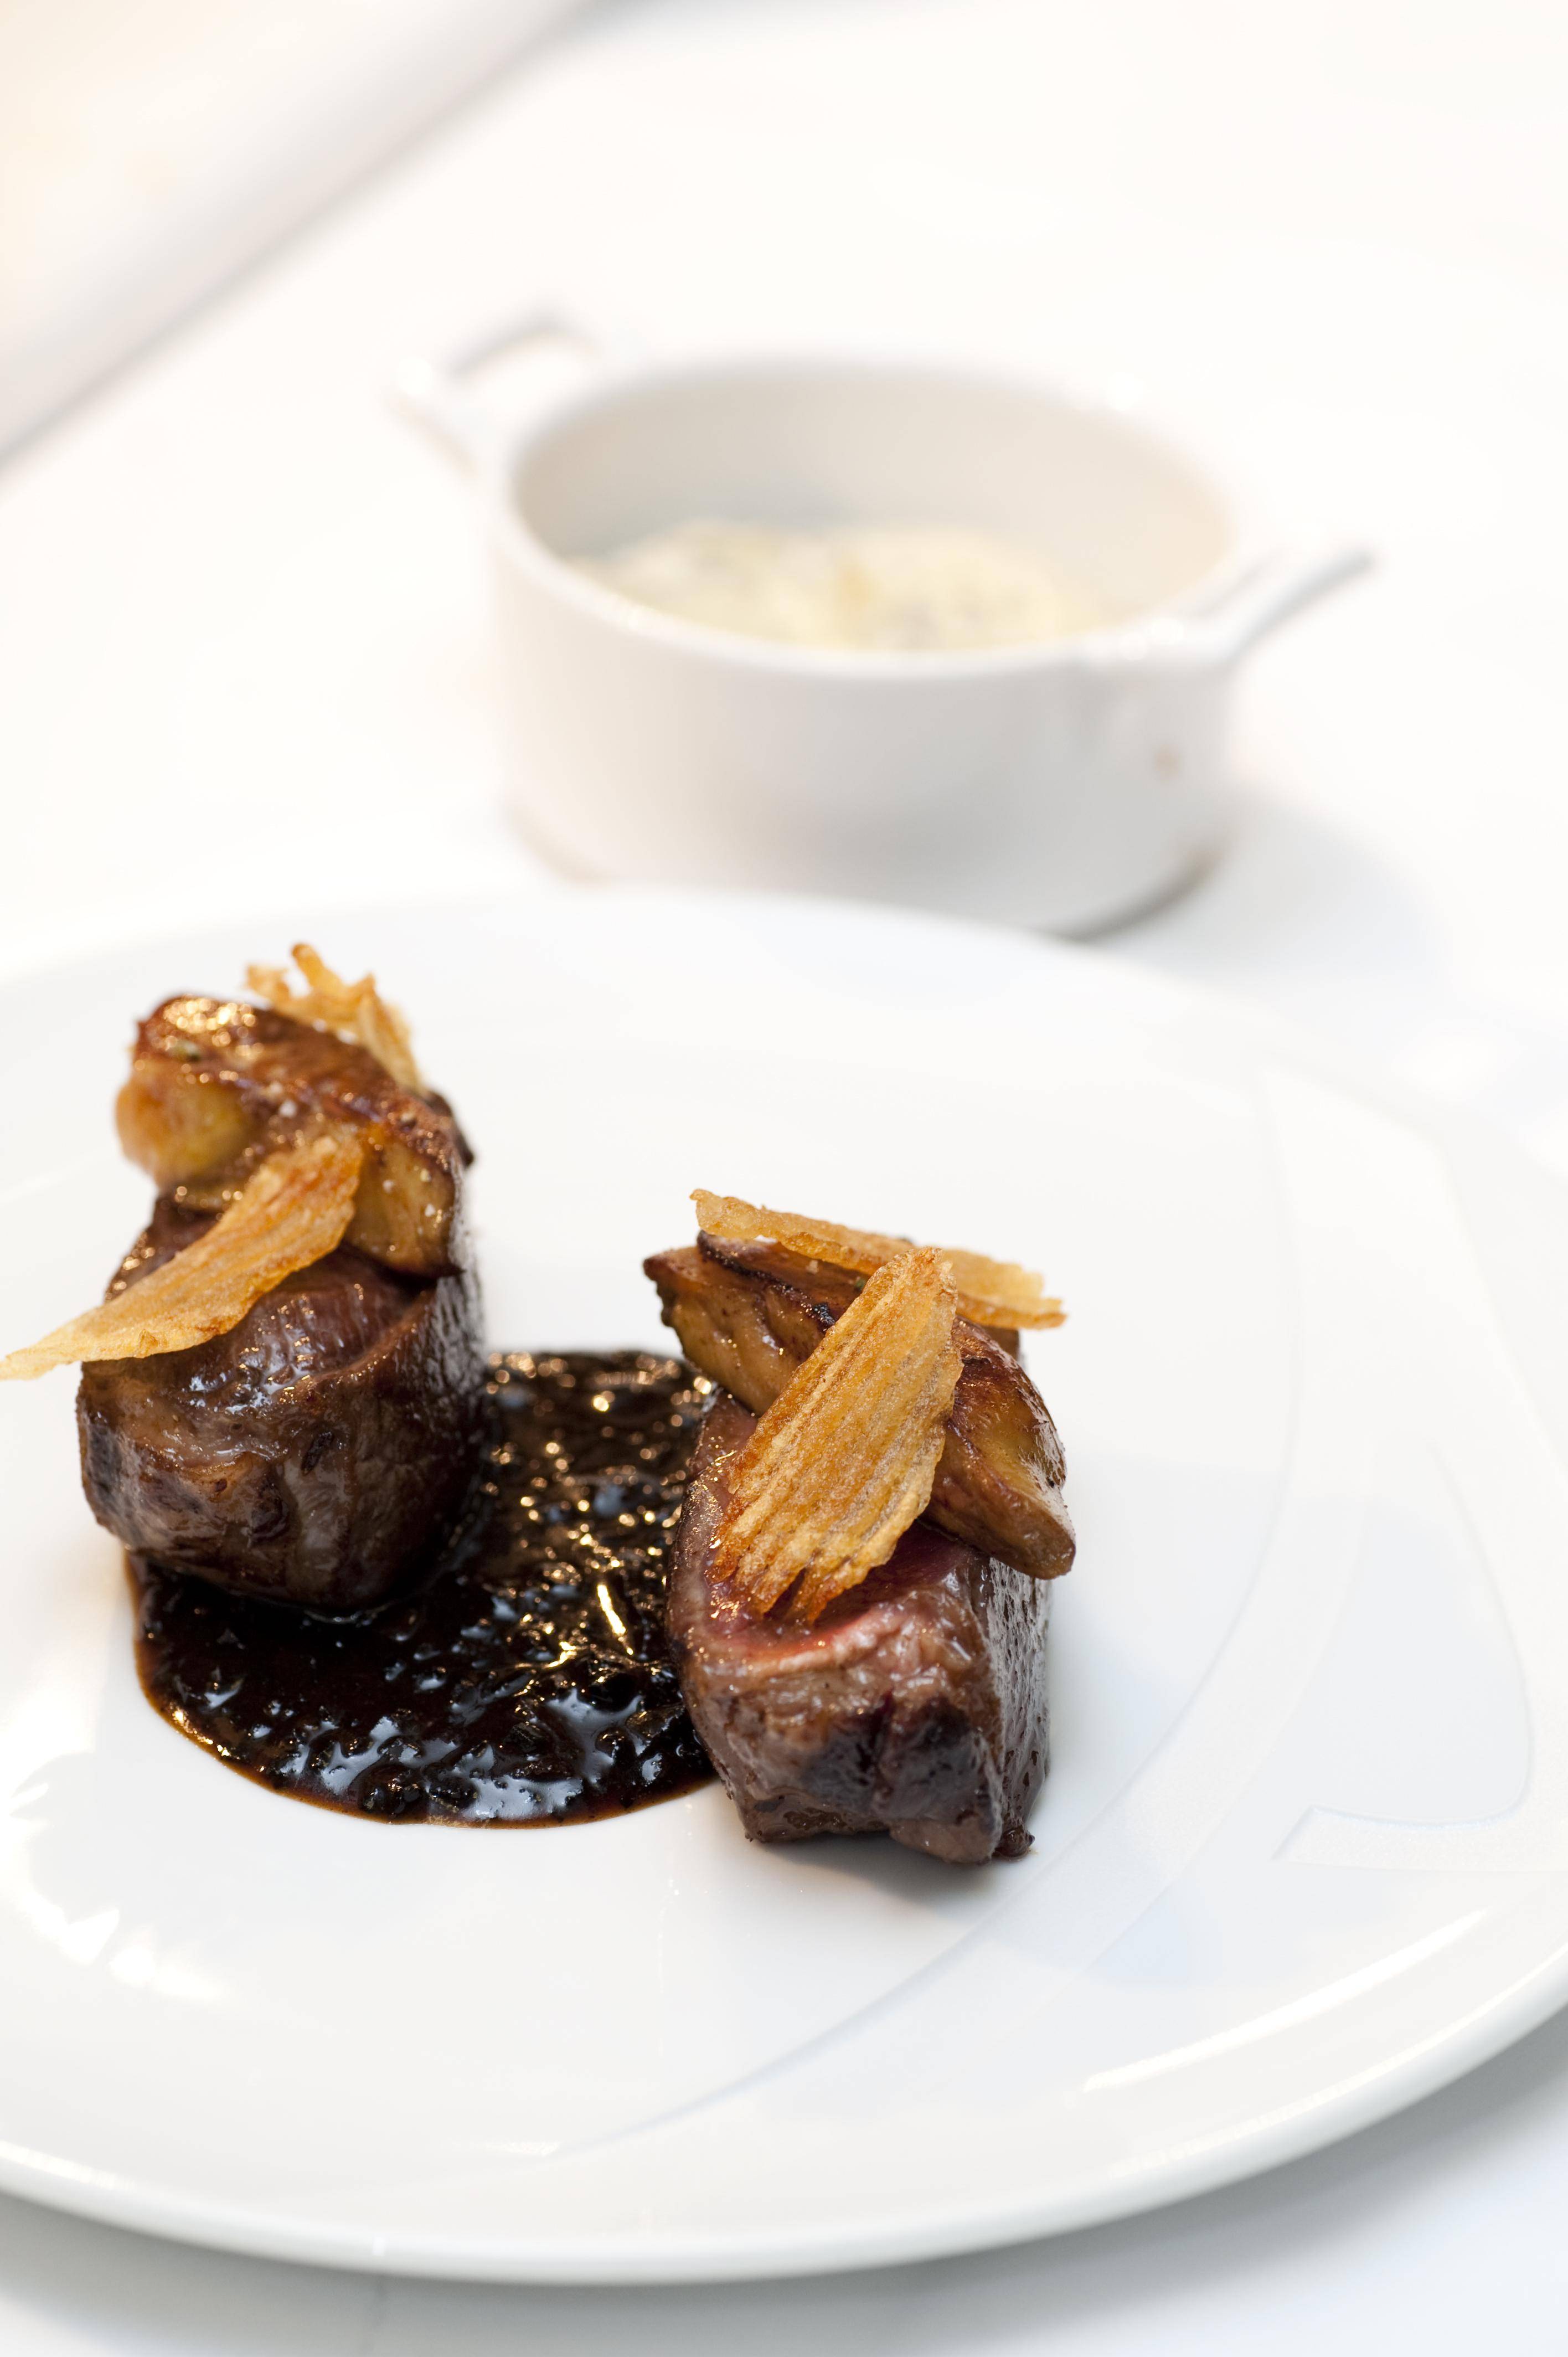 Australian Beef Sirloin Aiguillette Black Truffle Sauce∞ƒ¥Û¿˚—«Œ˜¿‰≈£≈≈≈‰∫⁄À…¬∂÷≠Õ¡∂πƒ‡